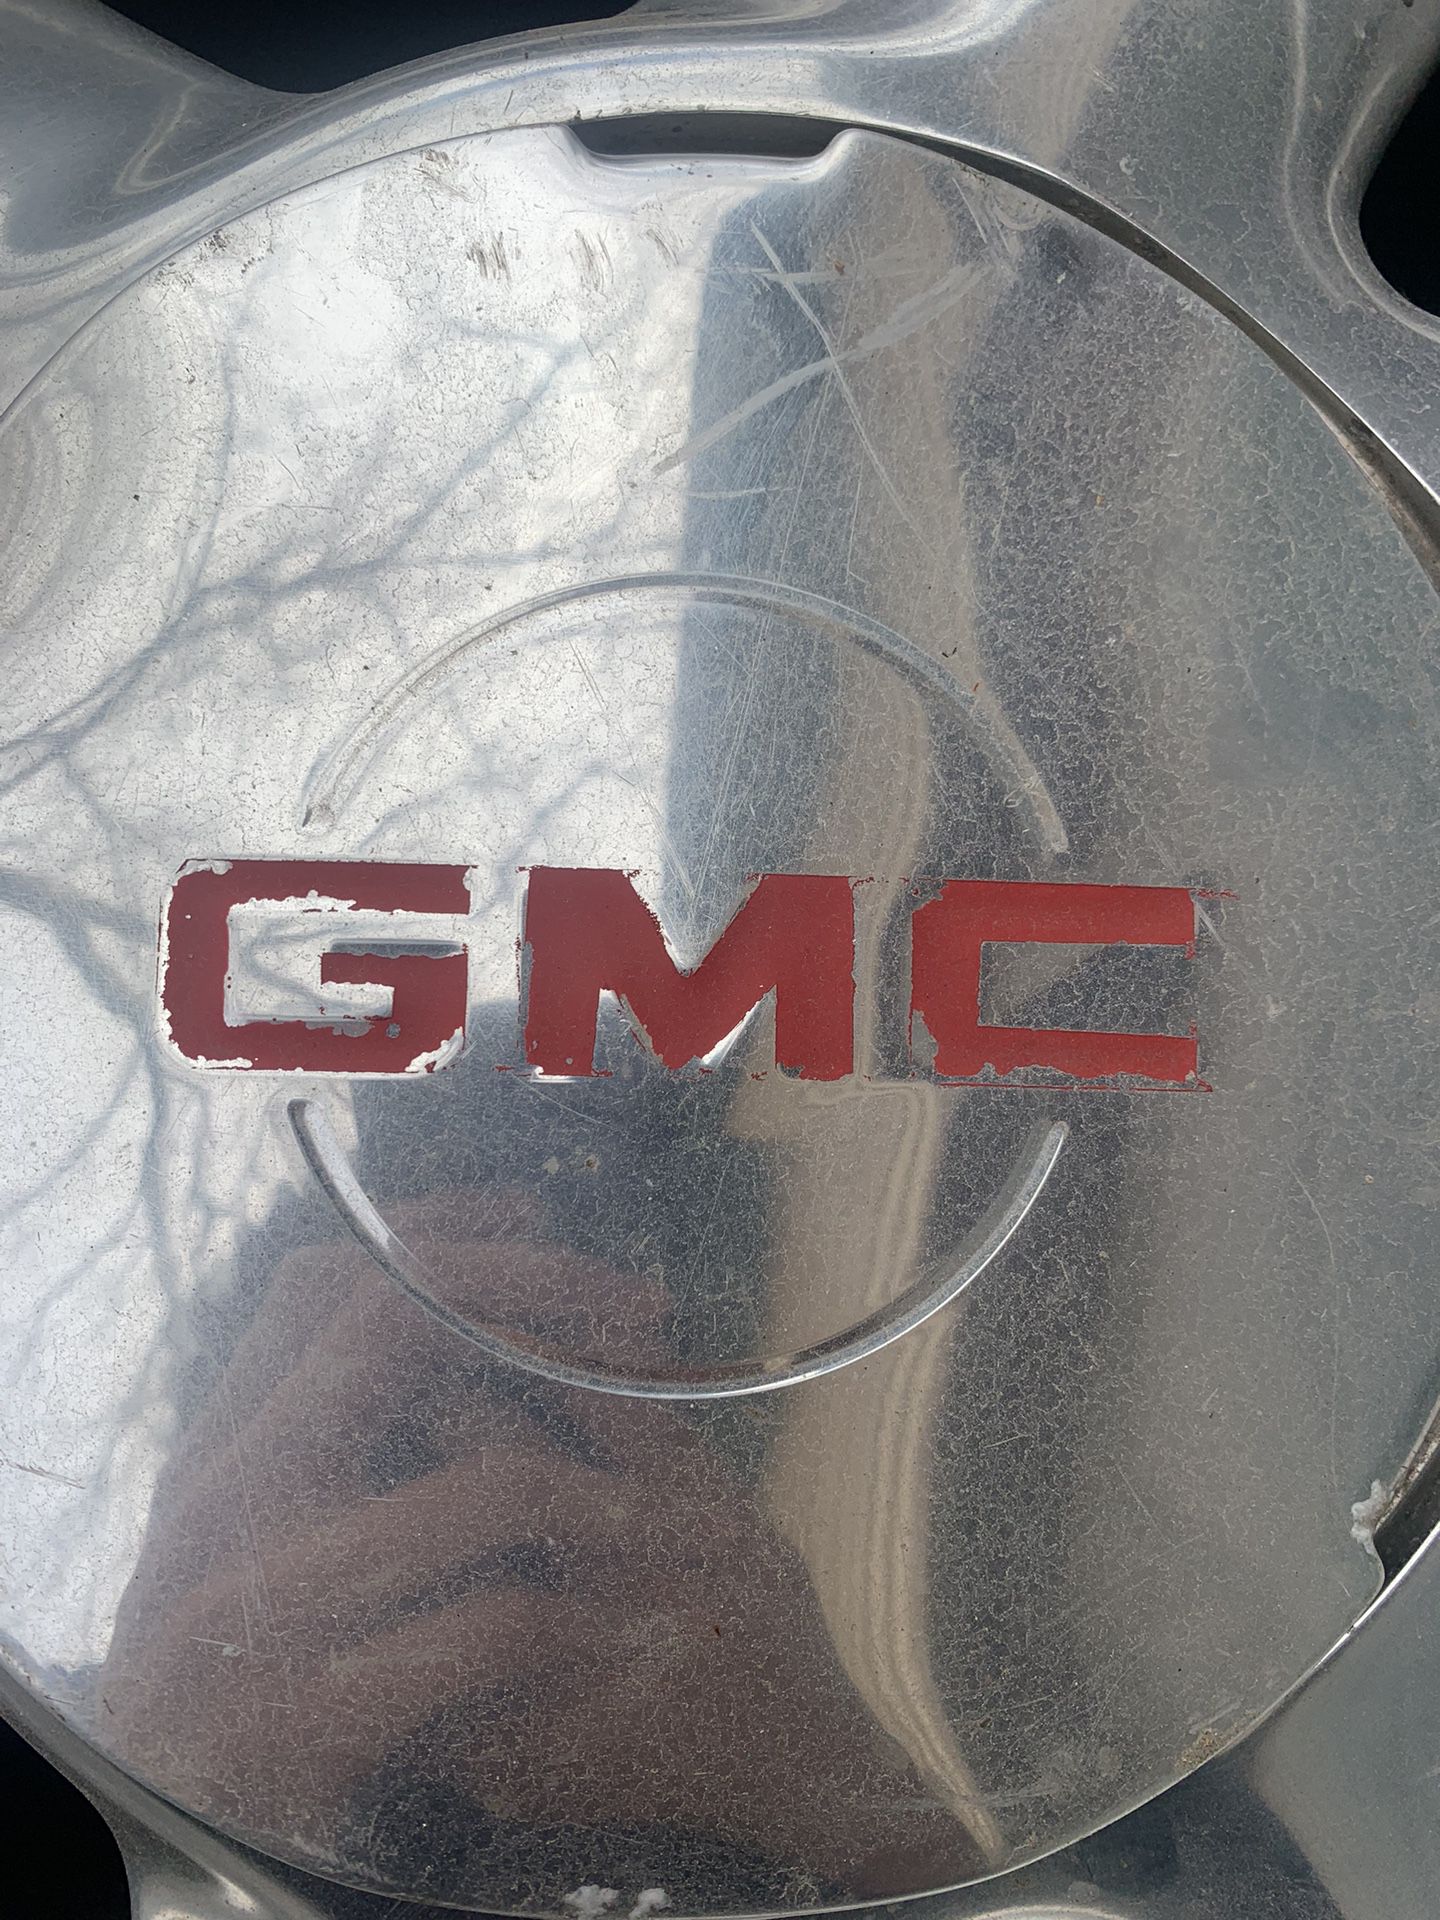 GMC Wheels